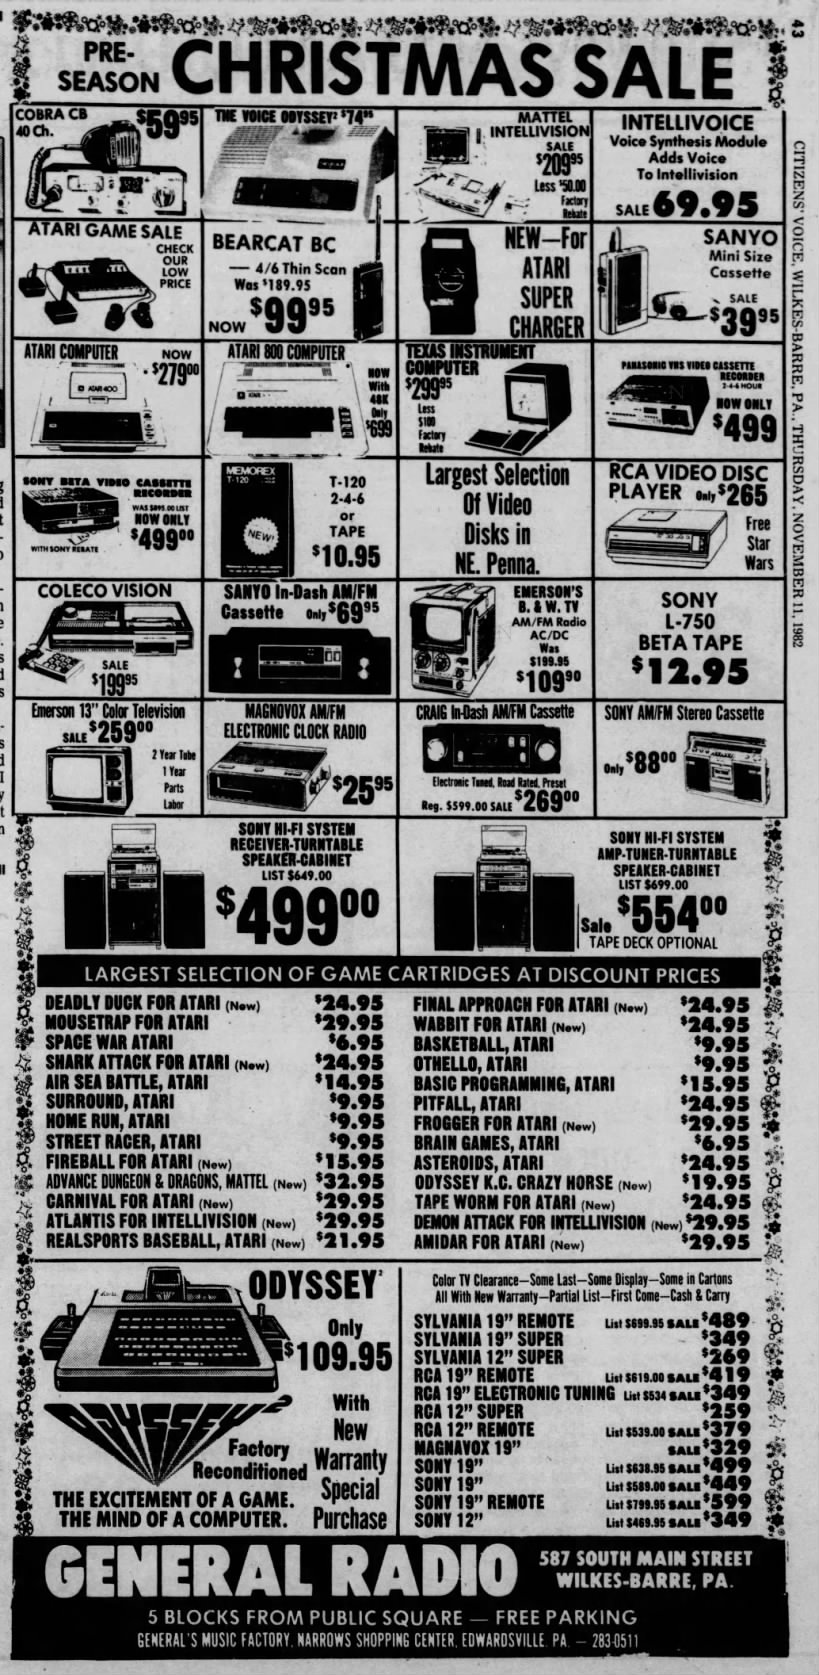 Atari 2600: GENERAL RADIO (Nov 11, 82)